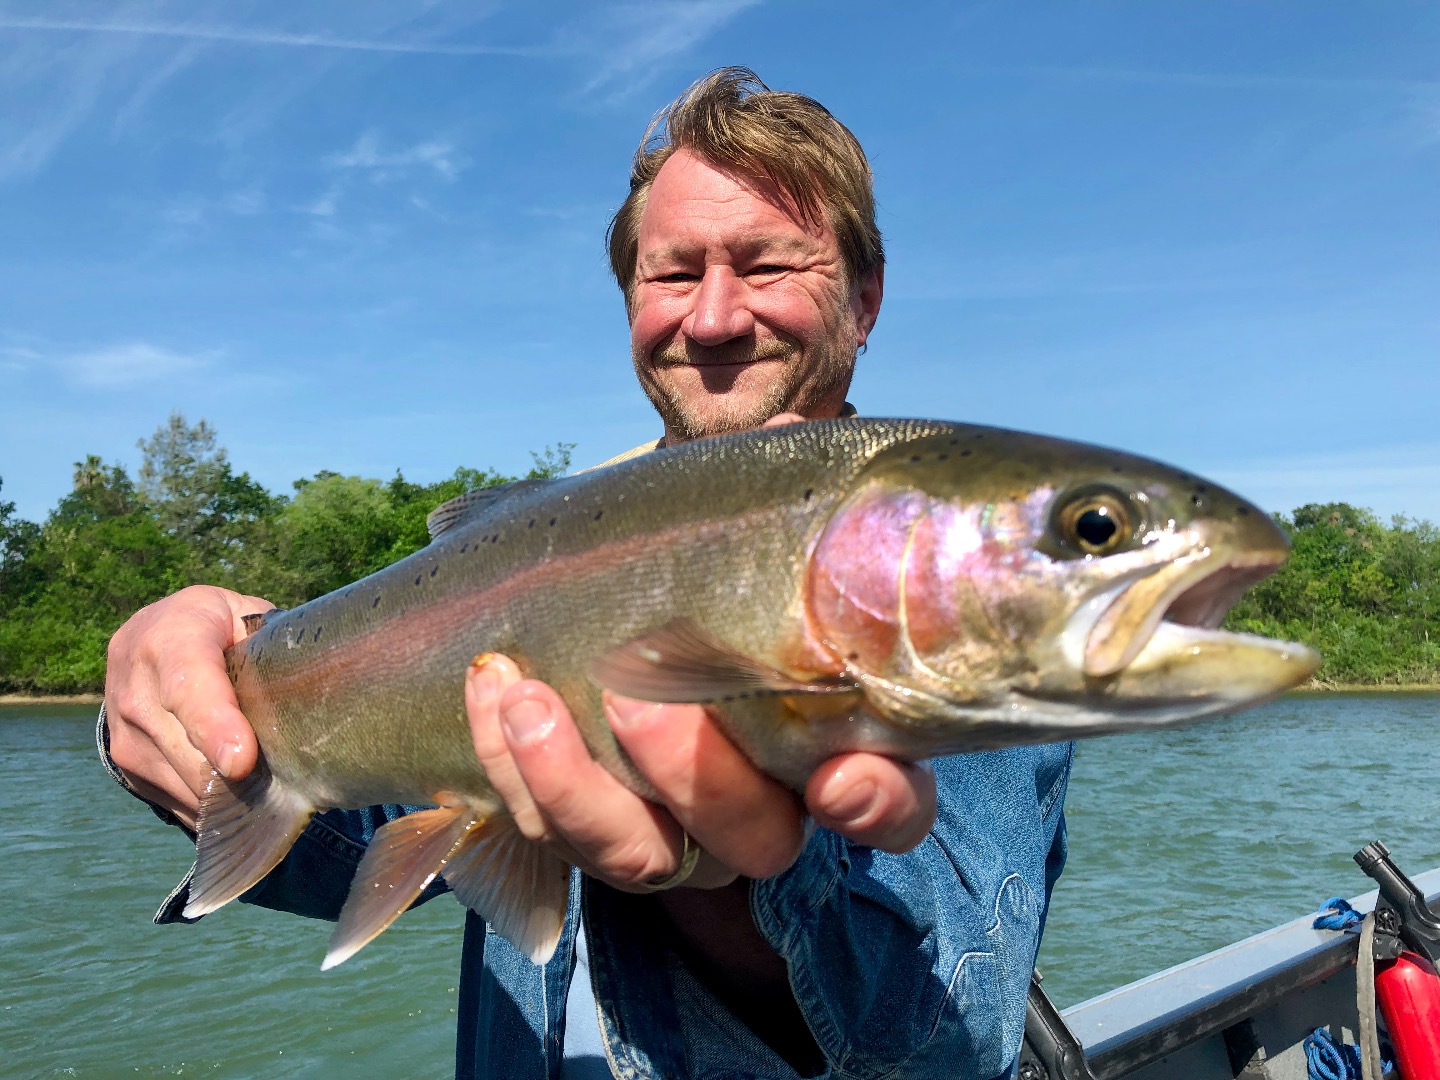 Sac River trout bite continues